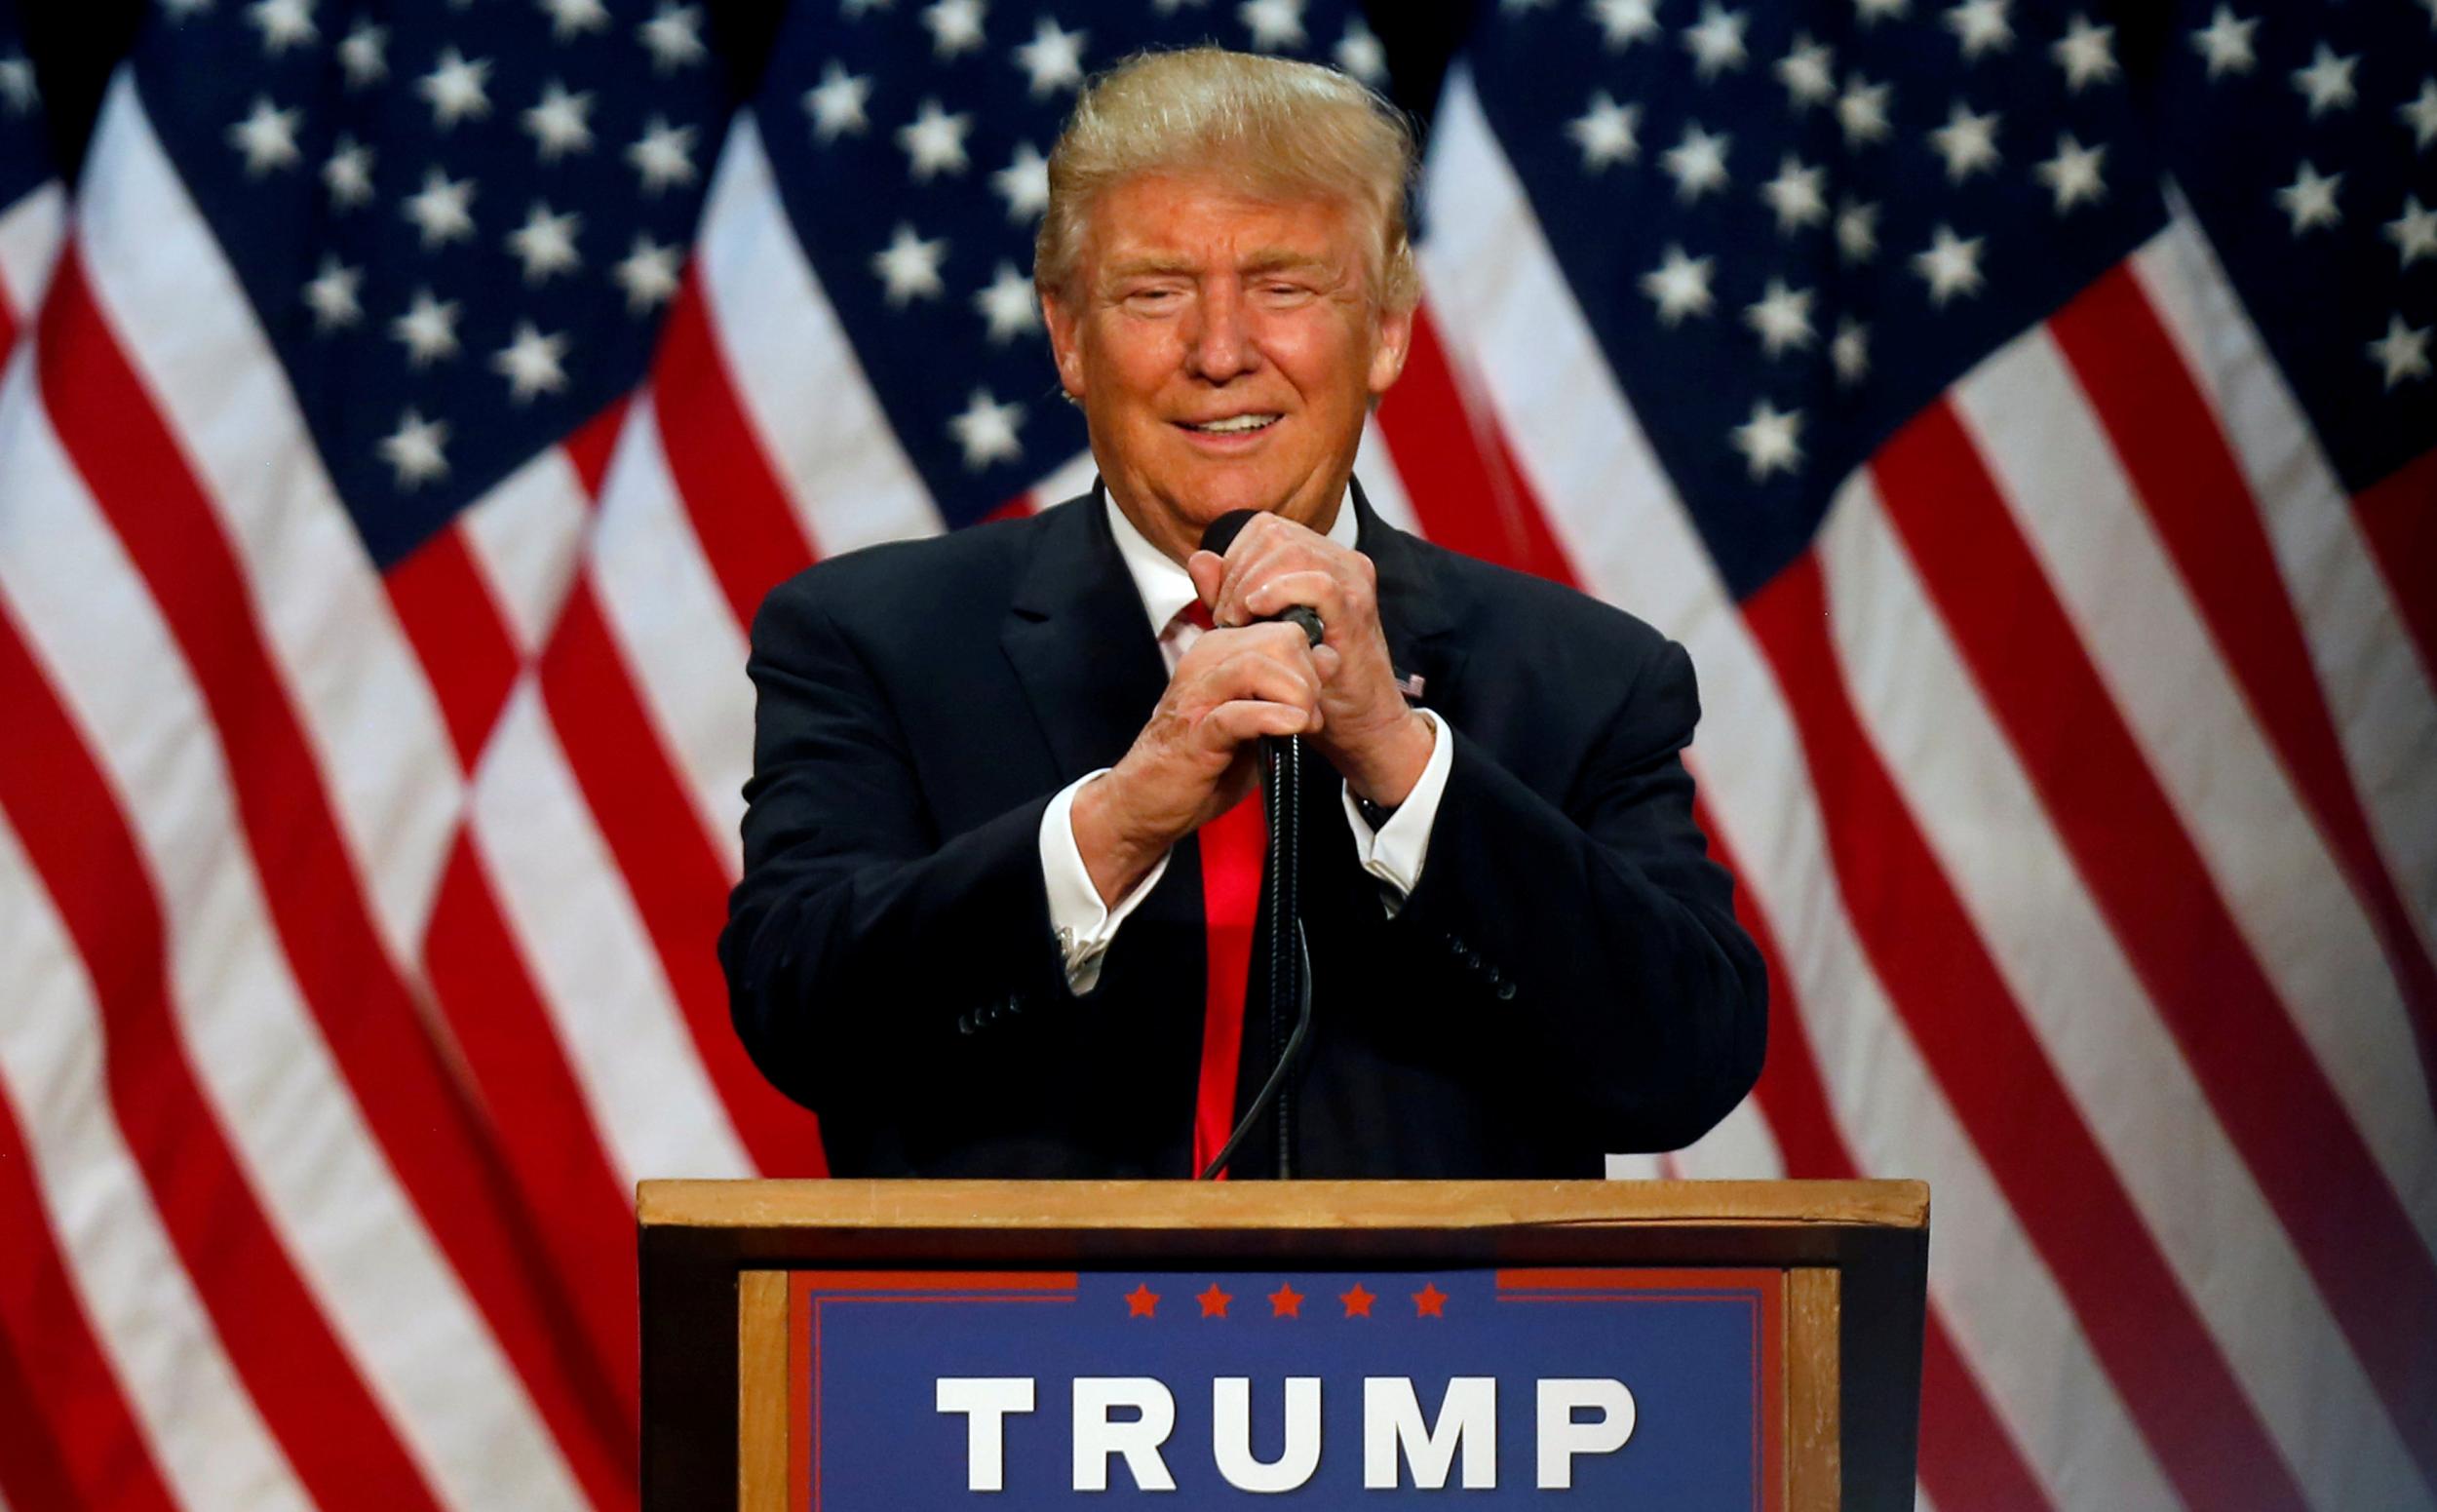 Republican U.S. presidential candidate Donald Trump speaks at a campaign rally in Eugene, Oregon, U.S